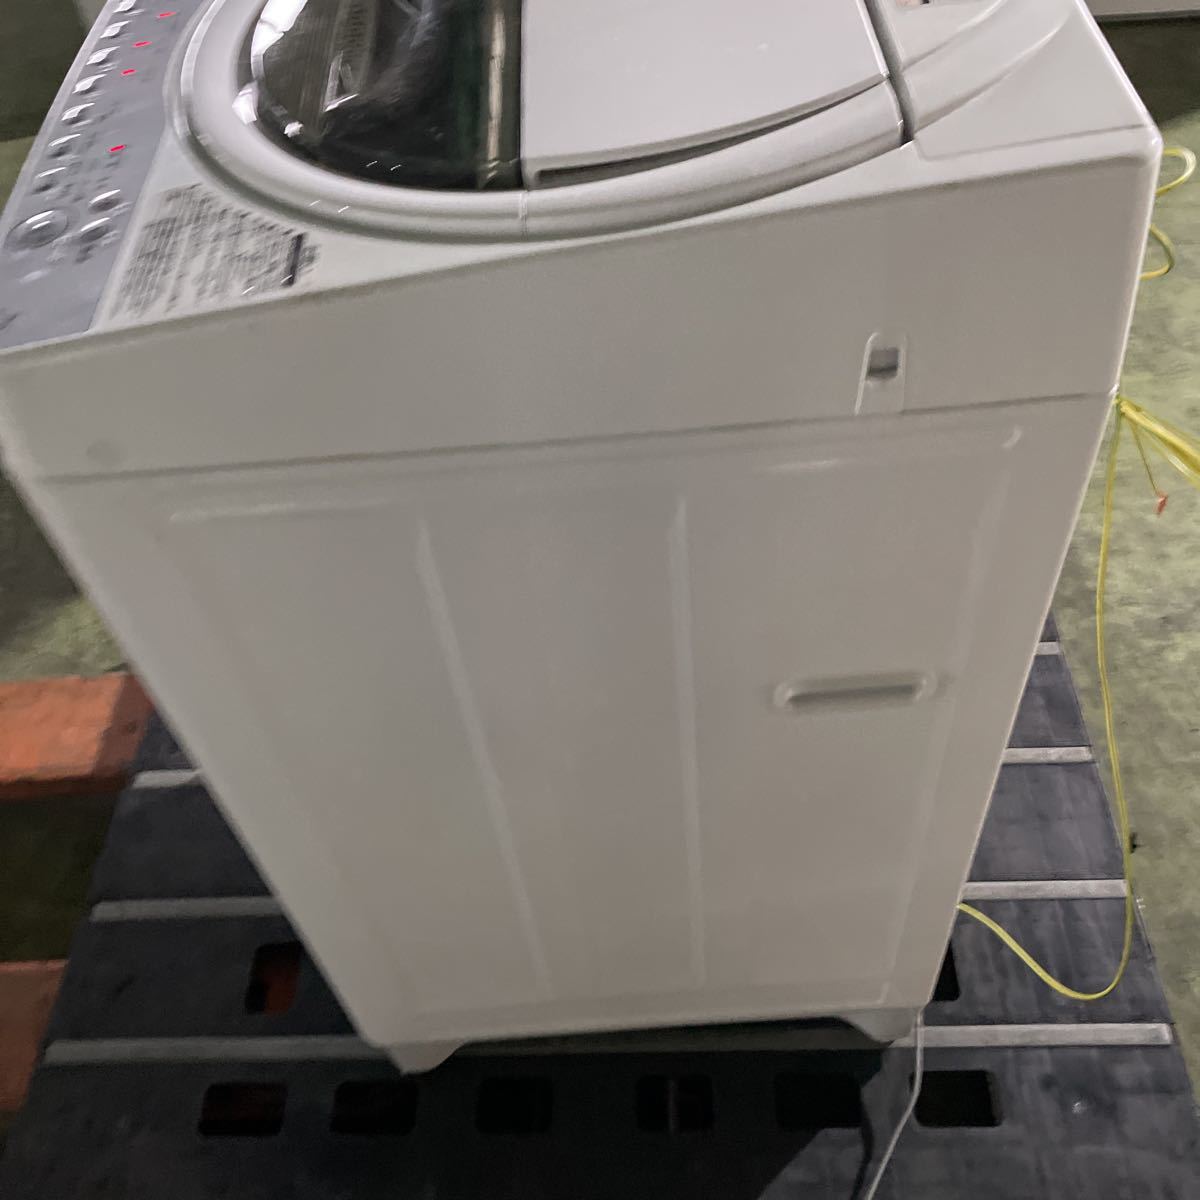 K0526-19 東芝 TOSHIBA 全自動洗濯機 洗濯機 AW-7G6 2018年製 7kg 의